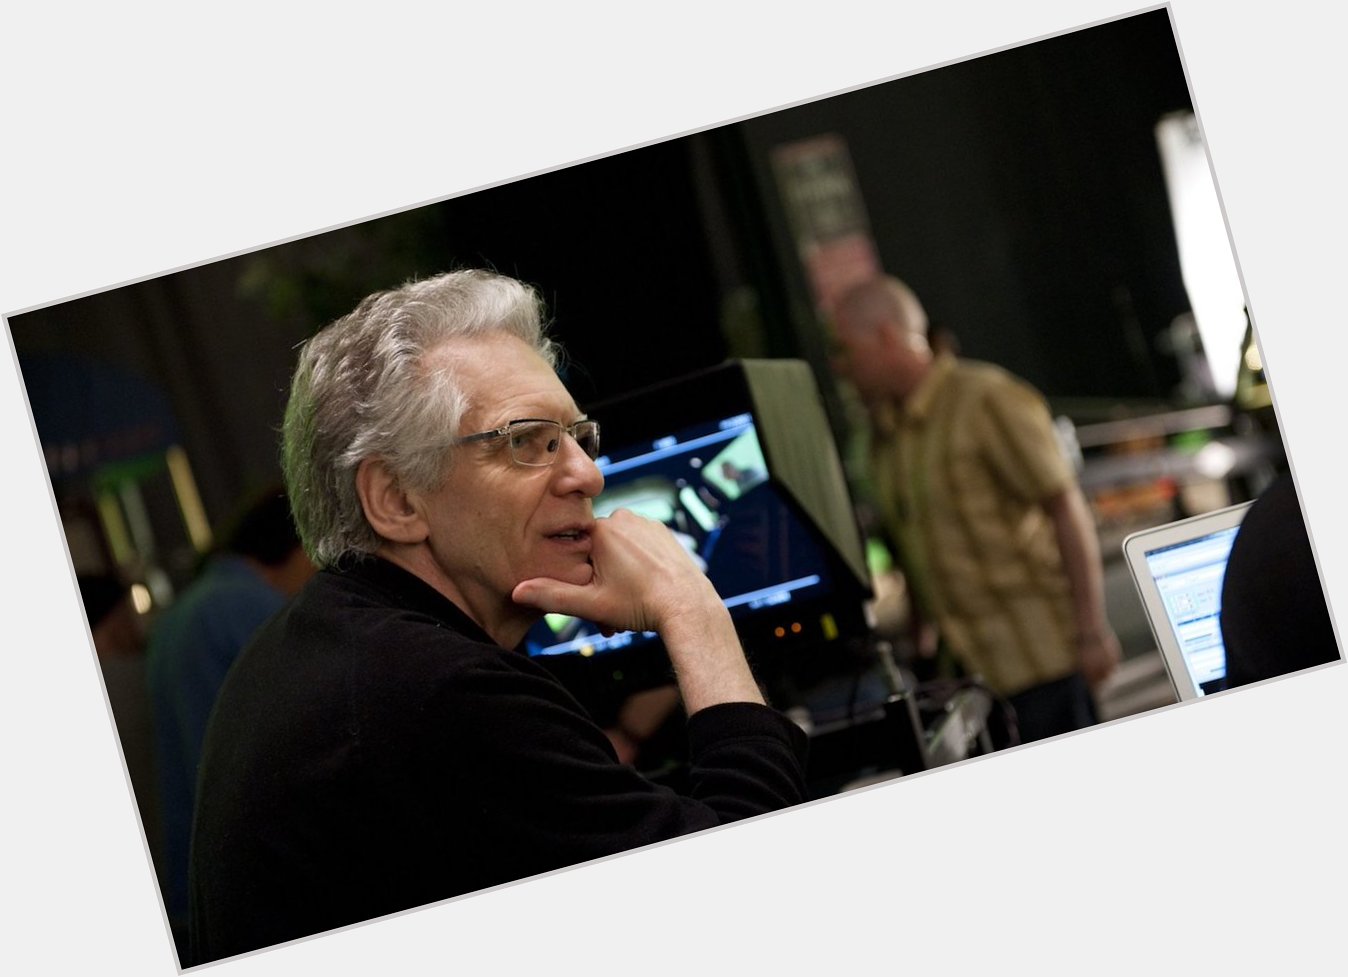 Wishing a happy 76th birthday to David Cronenberg! SCANNERS screens on on 4/12:  